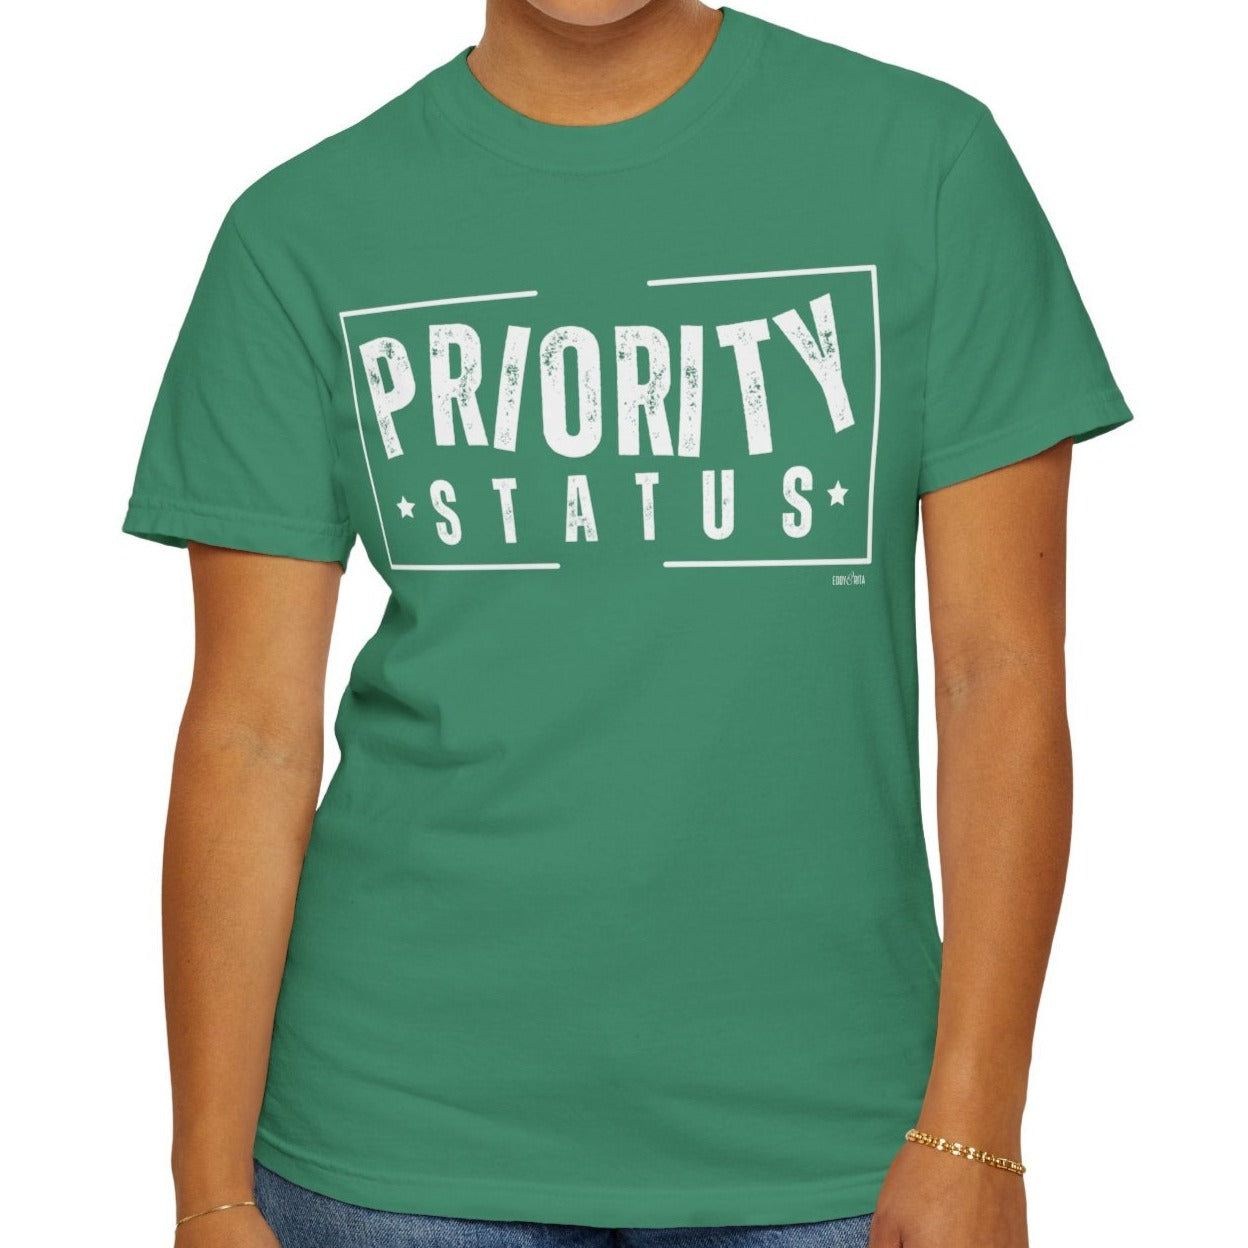 Priority Status Women's Comfort Colors T-Shirt by Eddy and Rita